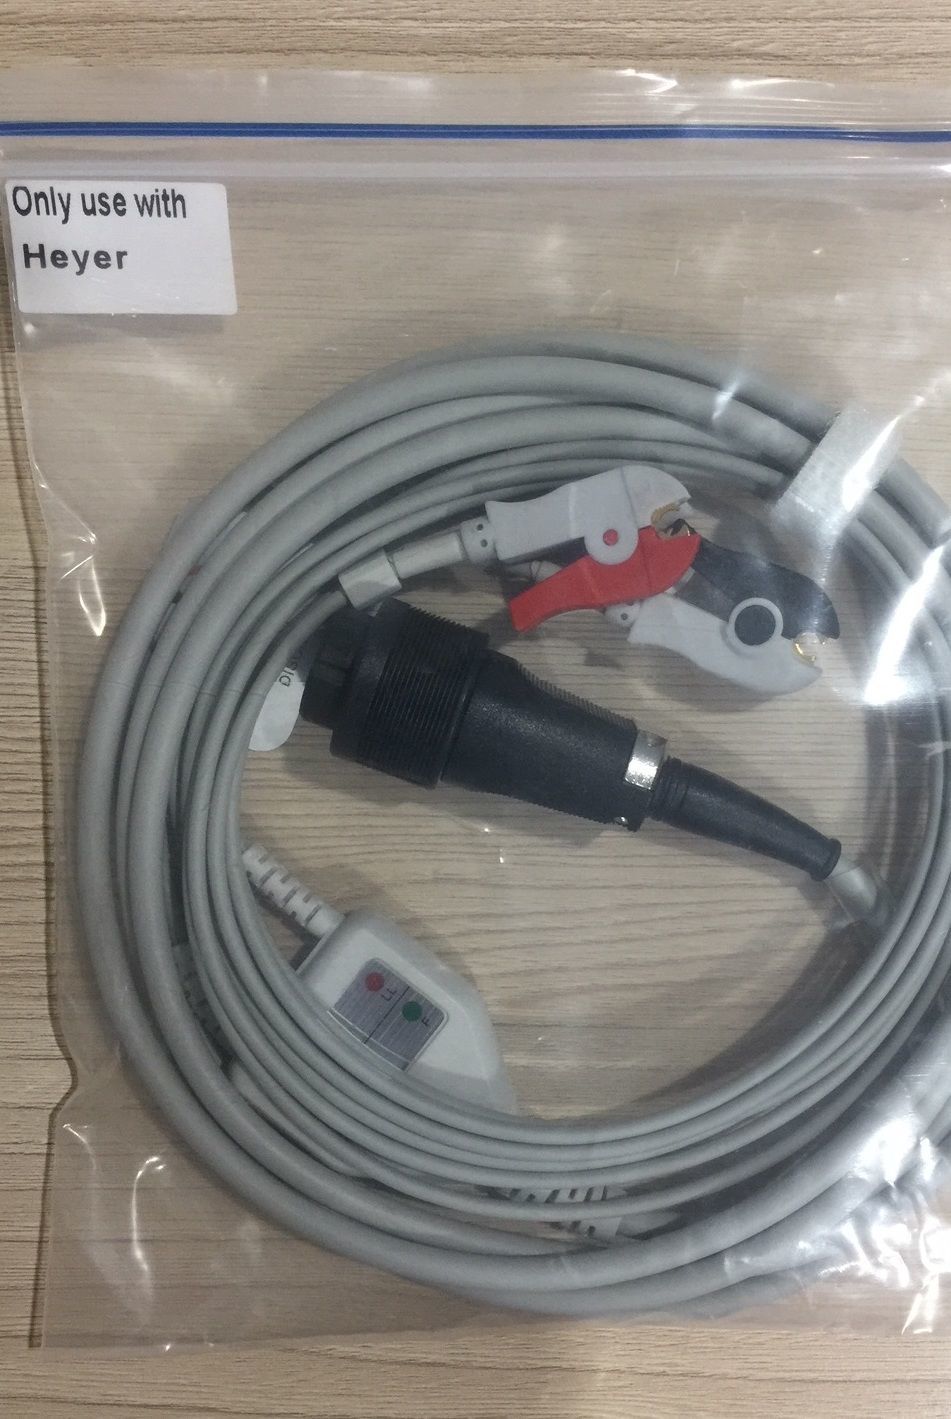 ECG single piece cable for patient monitor Heyer Vizor 15_สายอีซีจีเคเบิ้ลสำหรับเครื่องมอนิเตอร์ผู้ป่วย Heyer Vizor 15